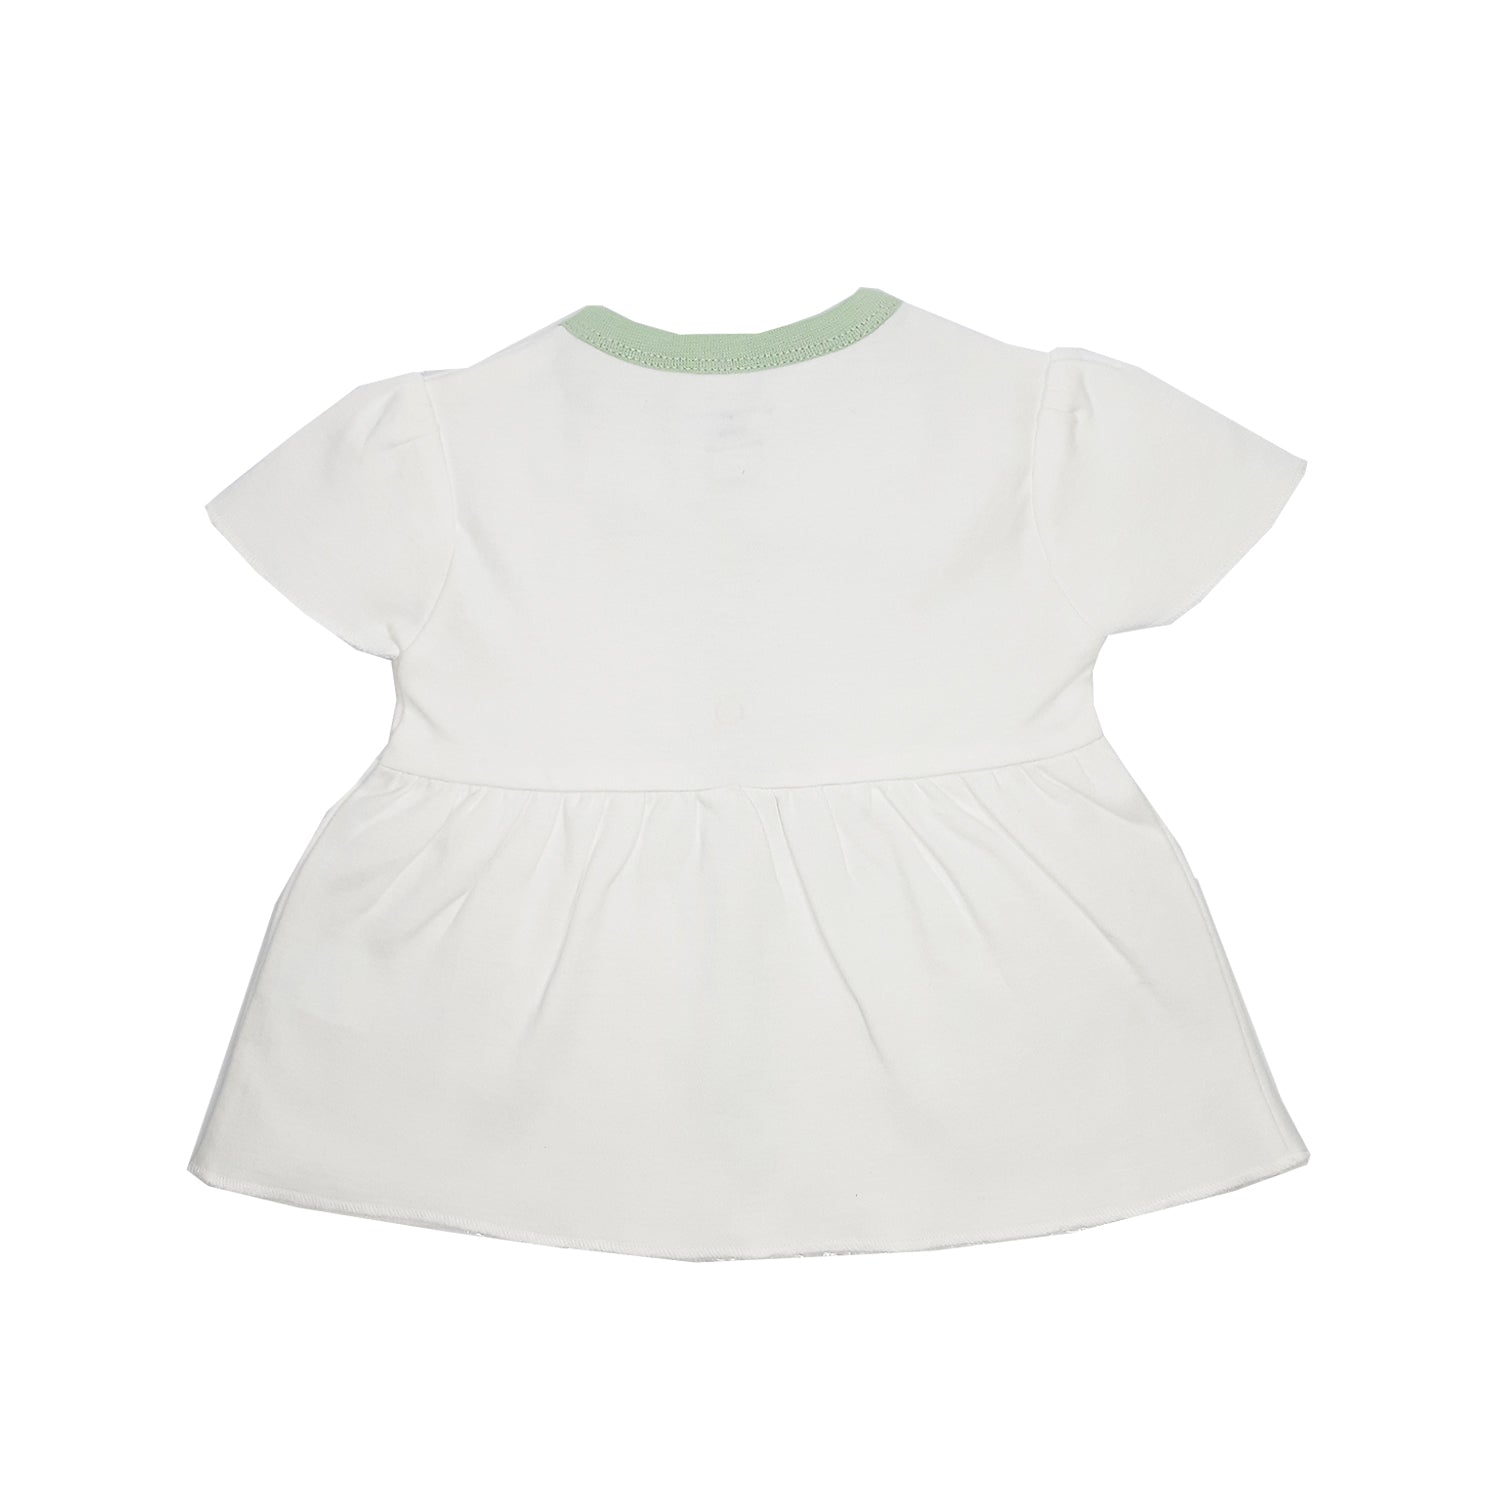 My Milestones T-shirt Half Sleeves Girls White/Navy & White /Sage Green - 2 Pc Pack